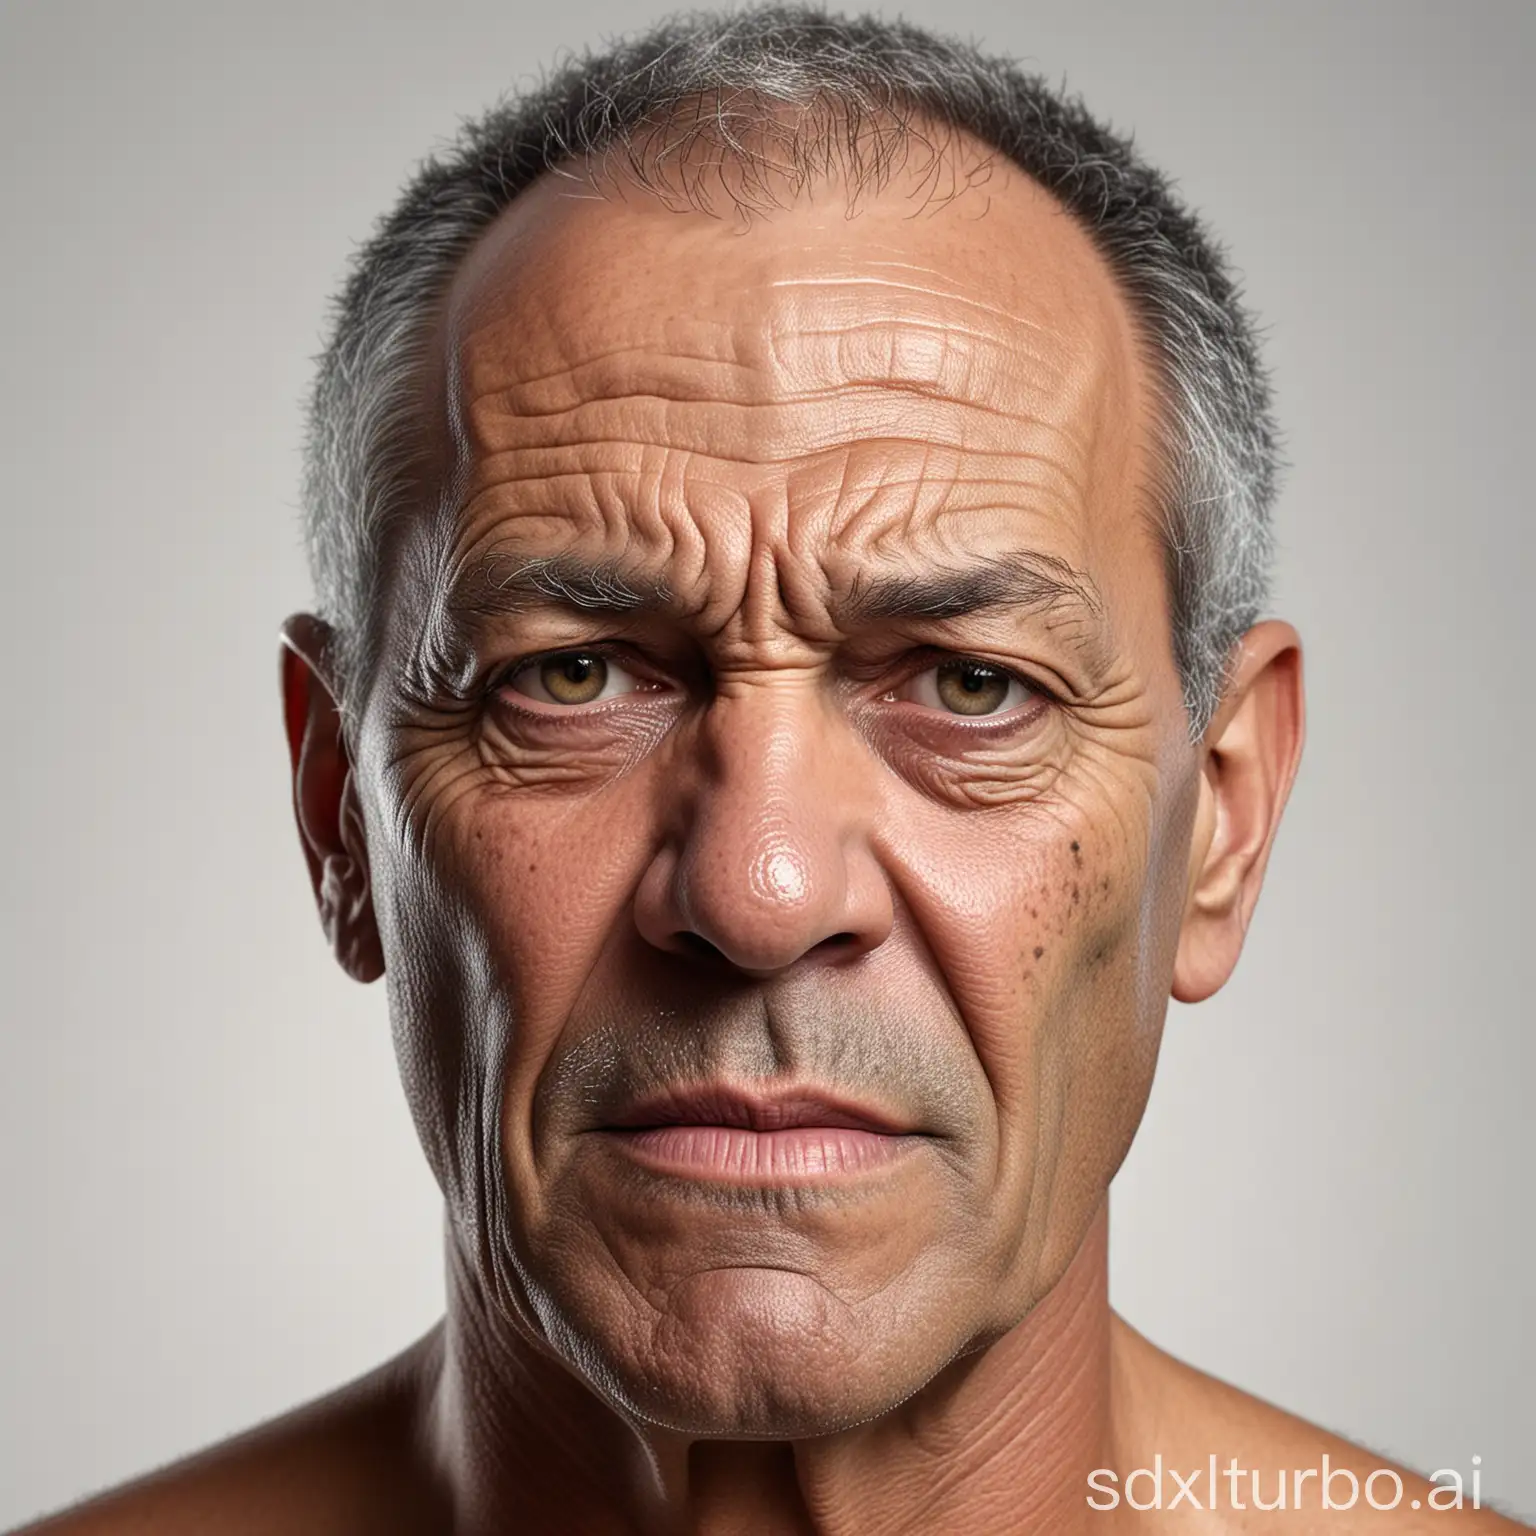 Expressive-CloseUp-Portrait-of-a-Serious-Black-Senior-Man-on-White-Background